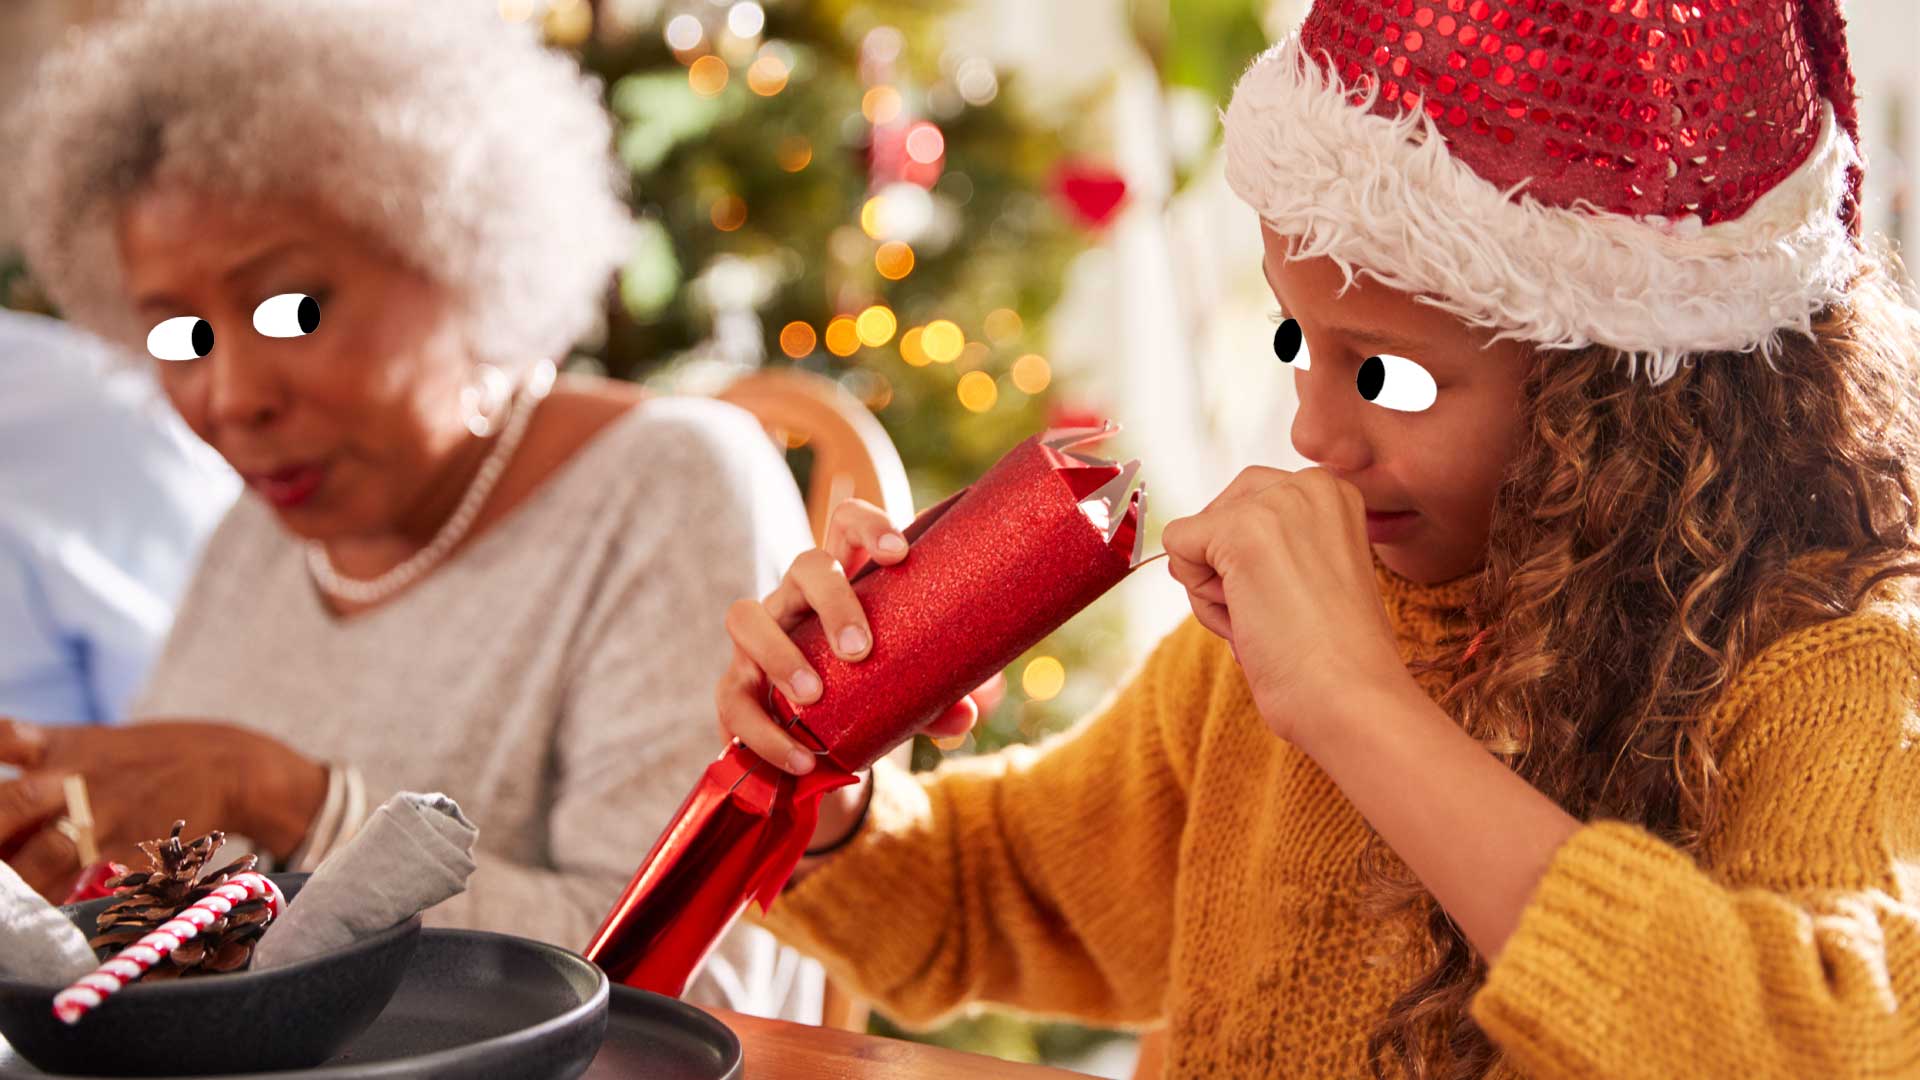 A girl peeking in a Christmas cracker